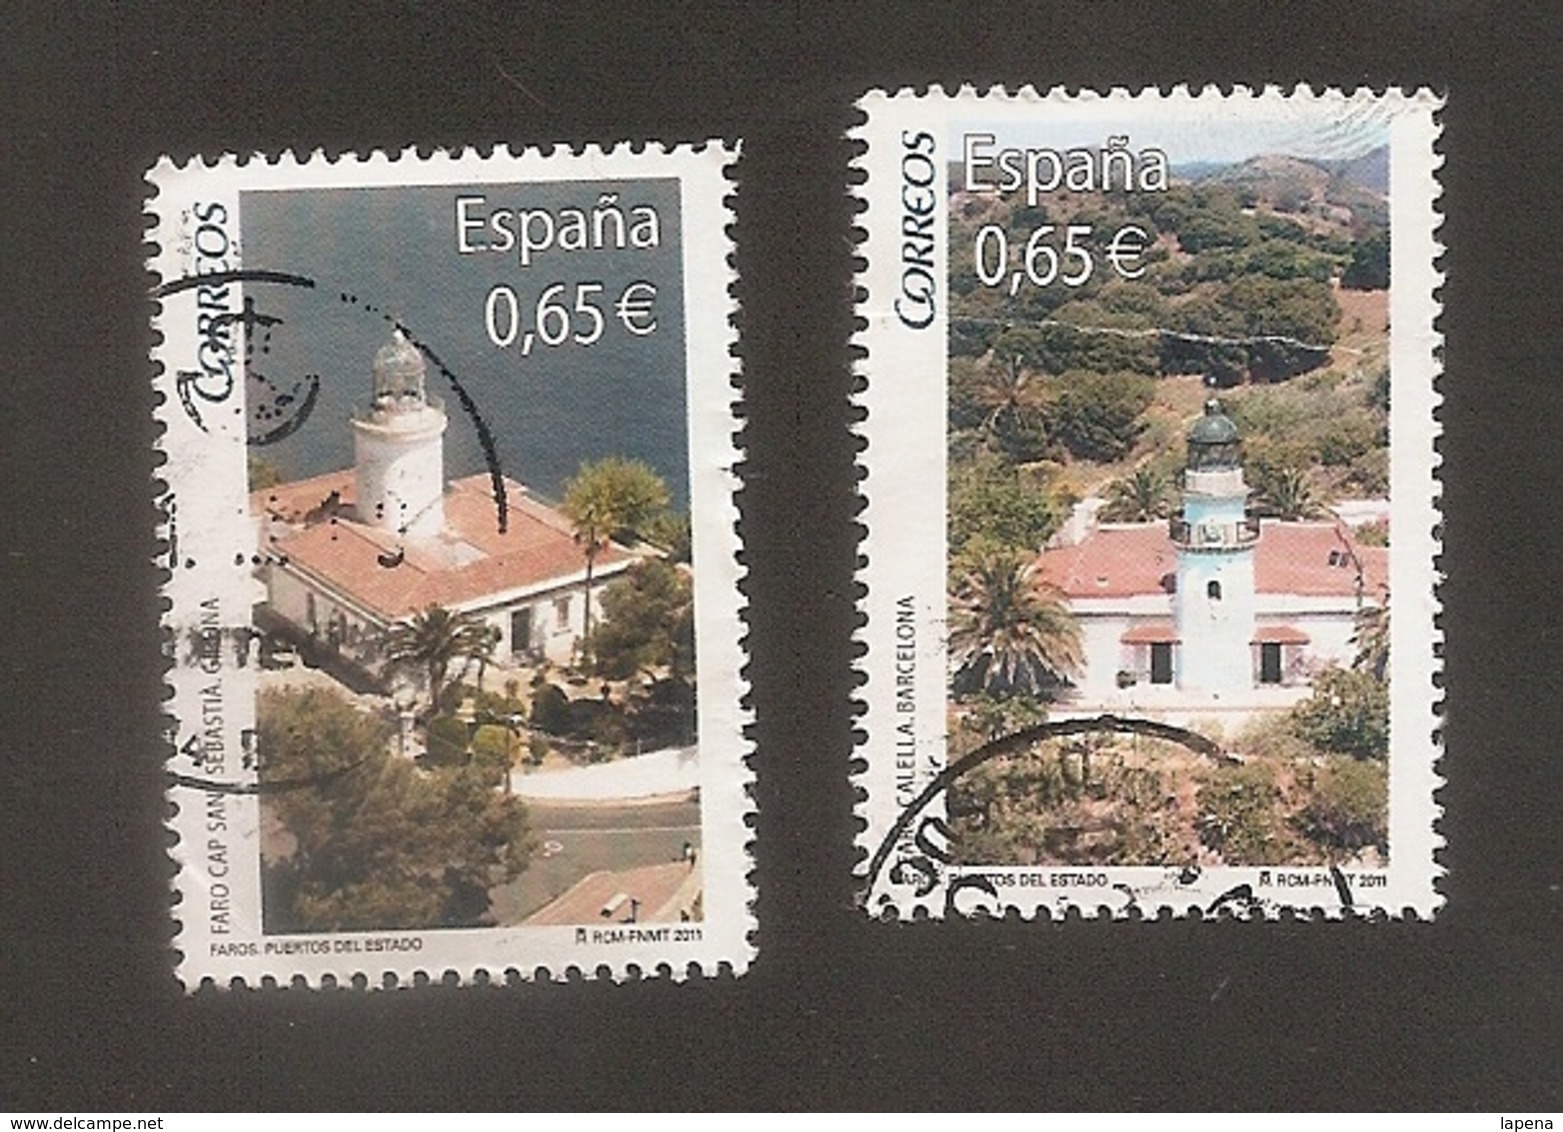 España 2011 Used - Used Stamps